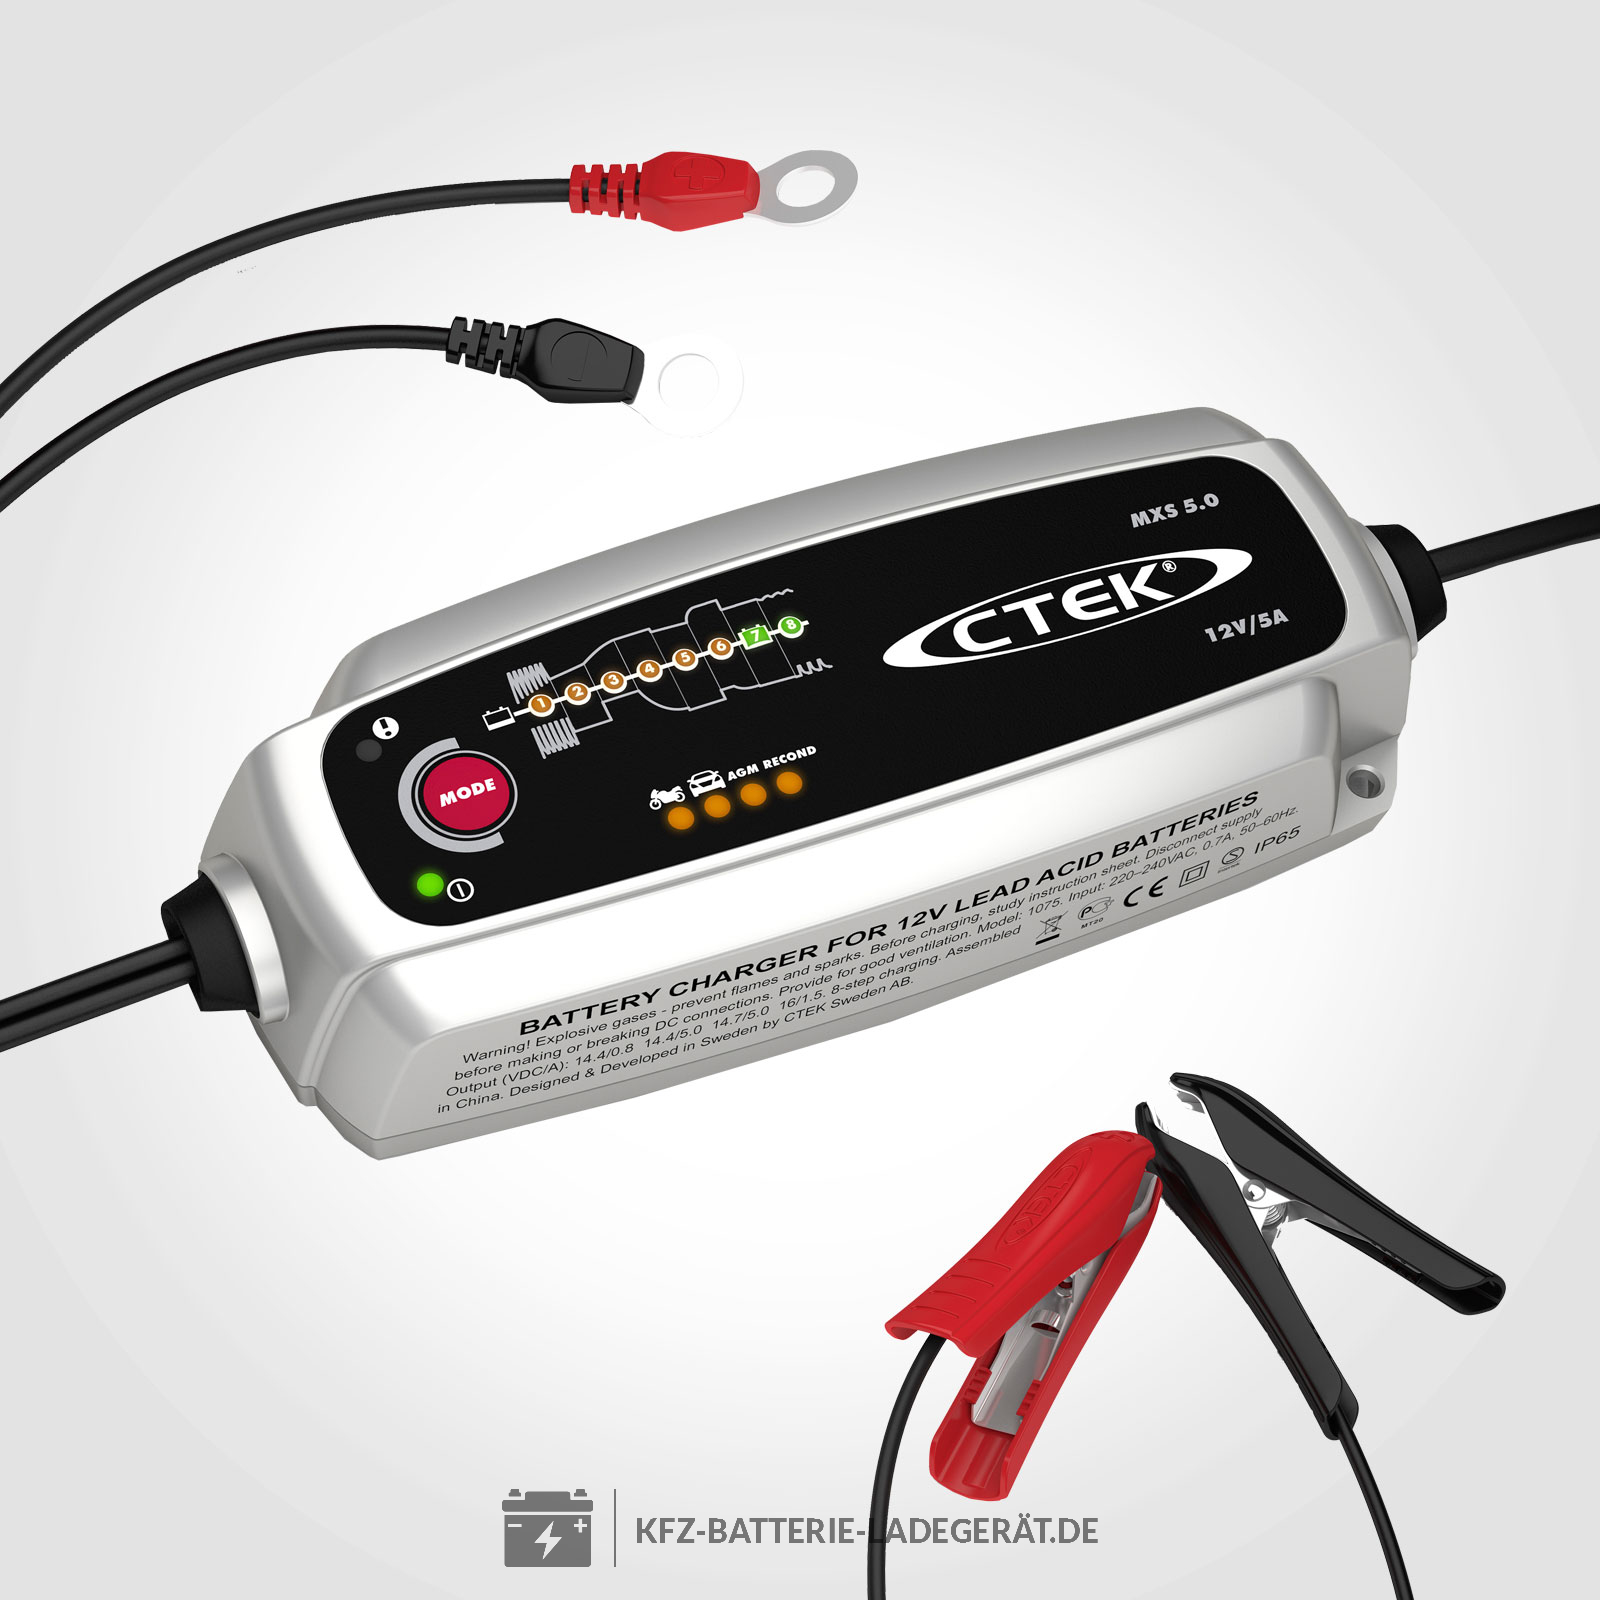 PKW Batterieladegerät CTEK Automatik Batterie Autobatterie Ladegerät MXS 7.0  KFZ, € 75,- (3040 Langenberg) - willhaben